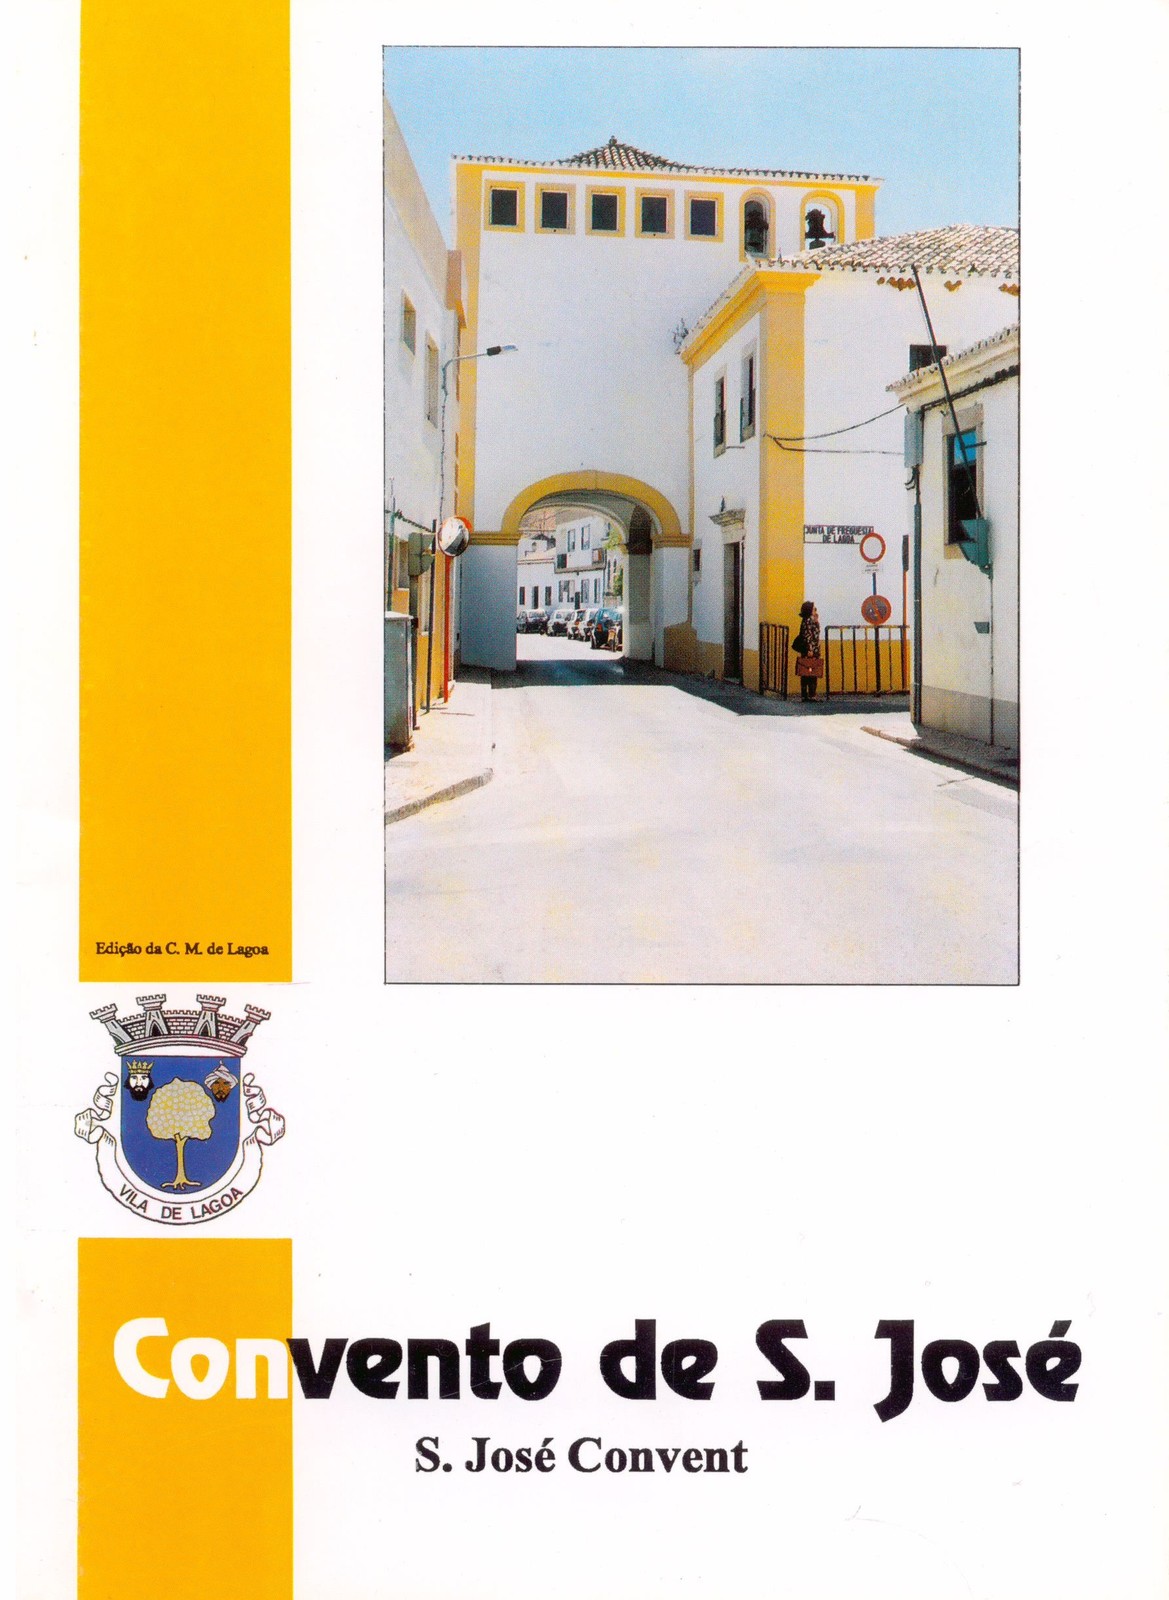 Convento de S jose